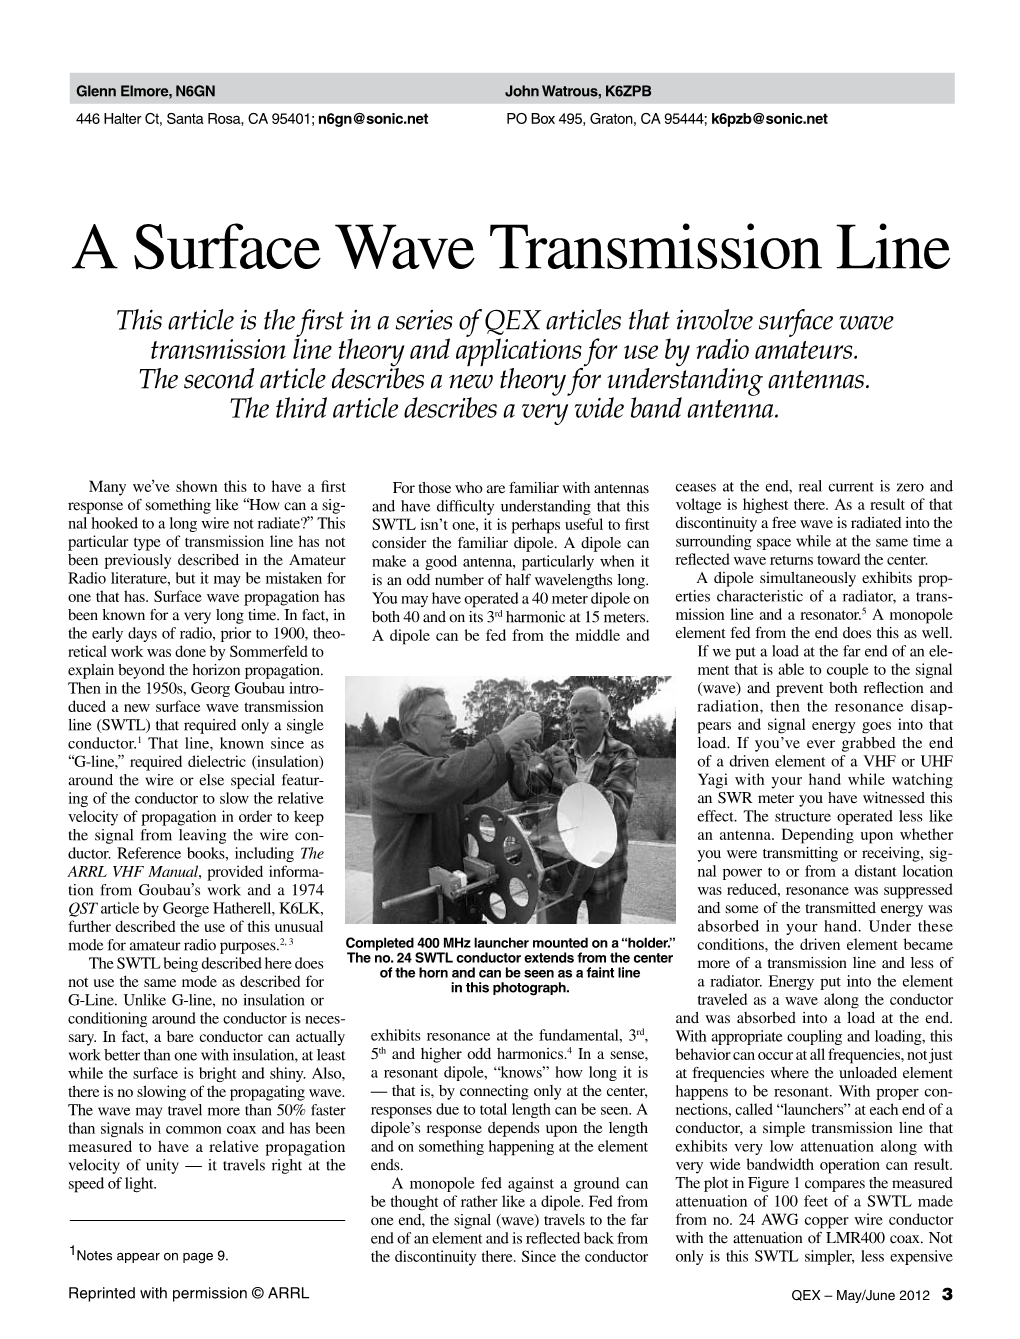 A Surface Wave Transmission Line